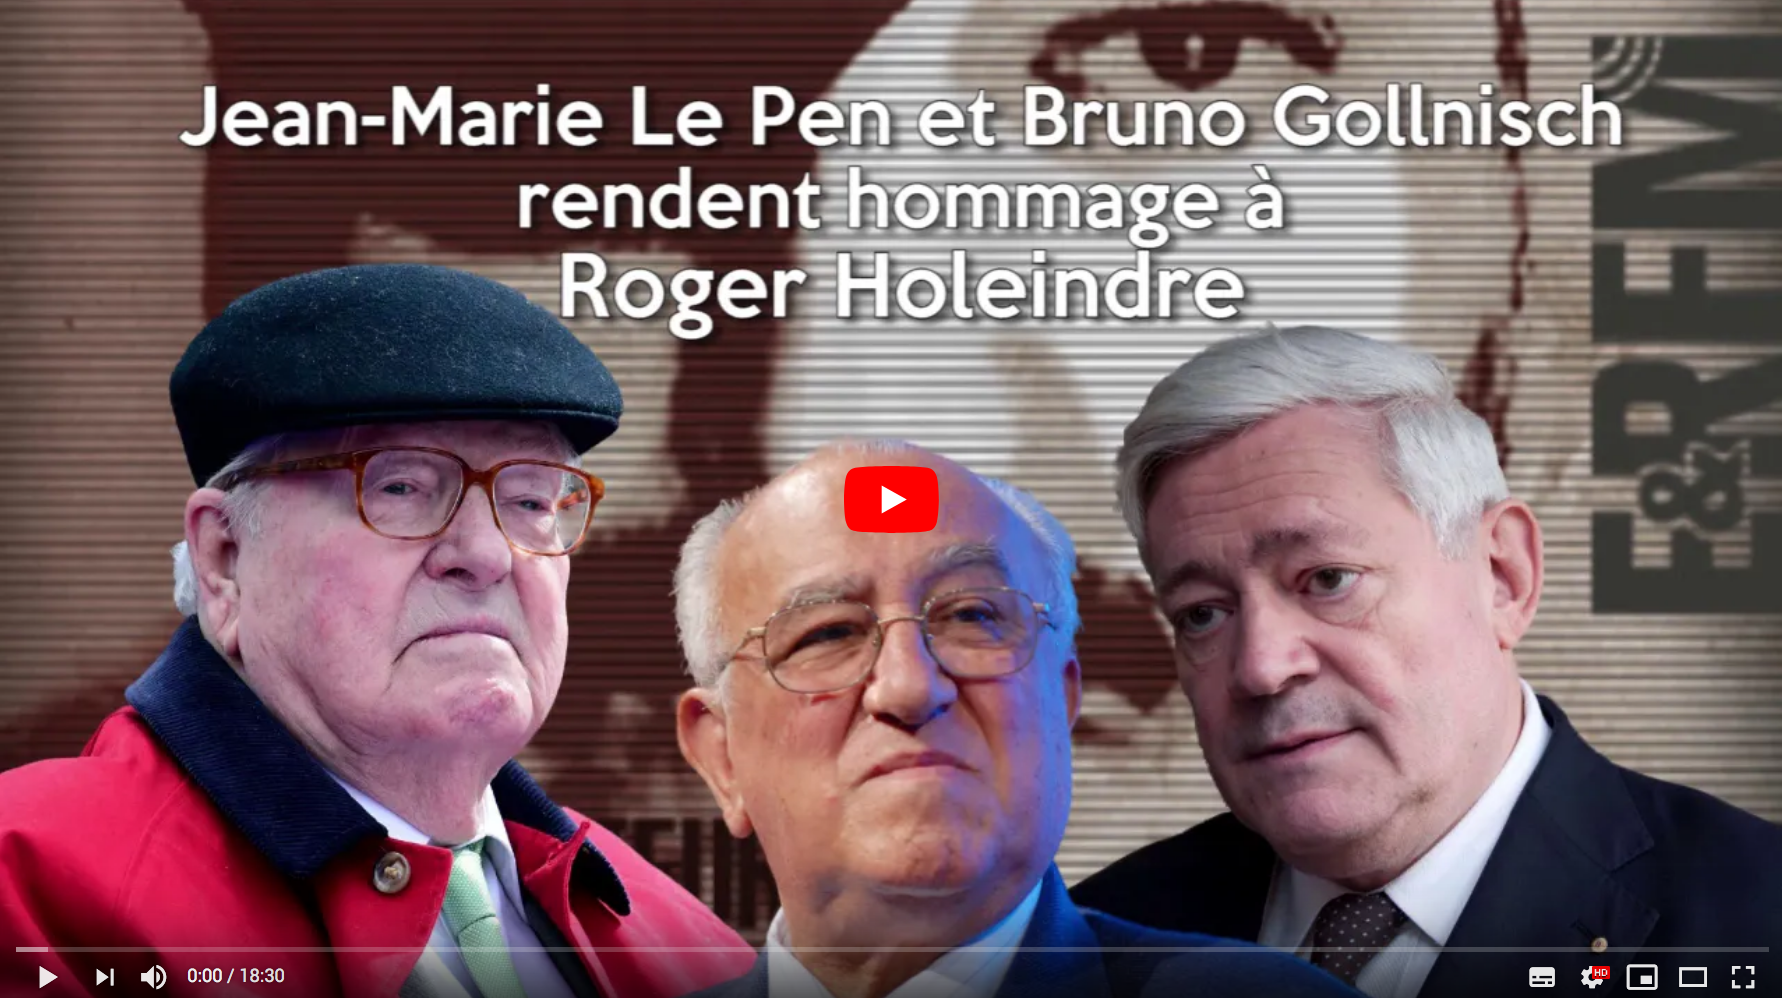 Jean-Marie Le Pen et Bruno Gollnisch rendent hommage à Roger Holeindre